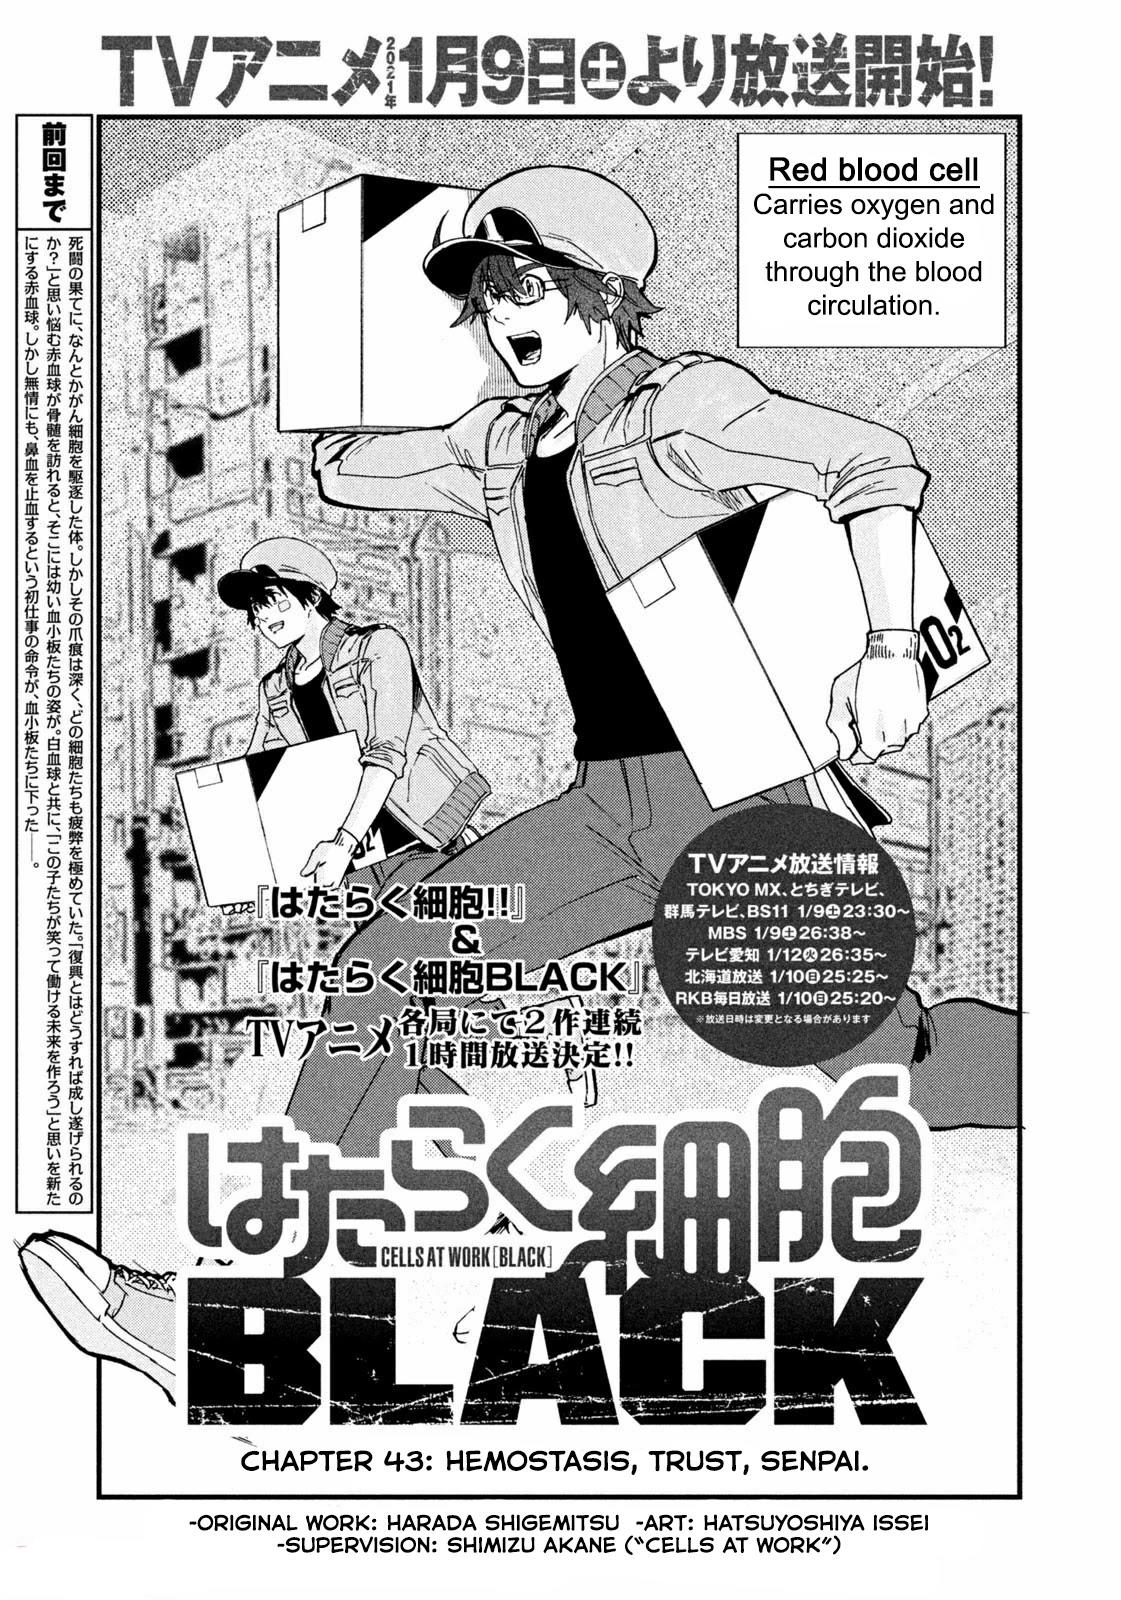 Read Hataraku Saibou Black Chapter 44 on Mangakakalot